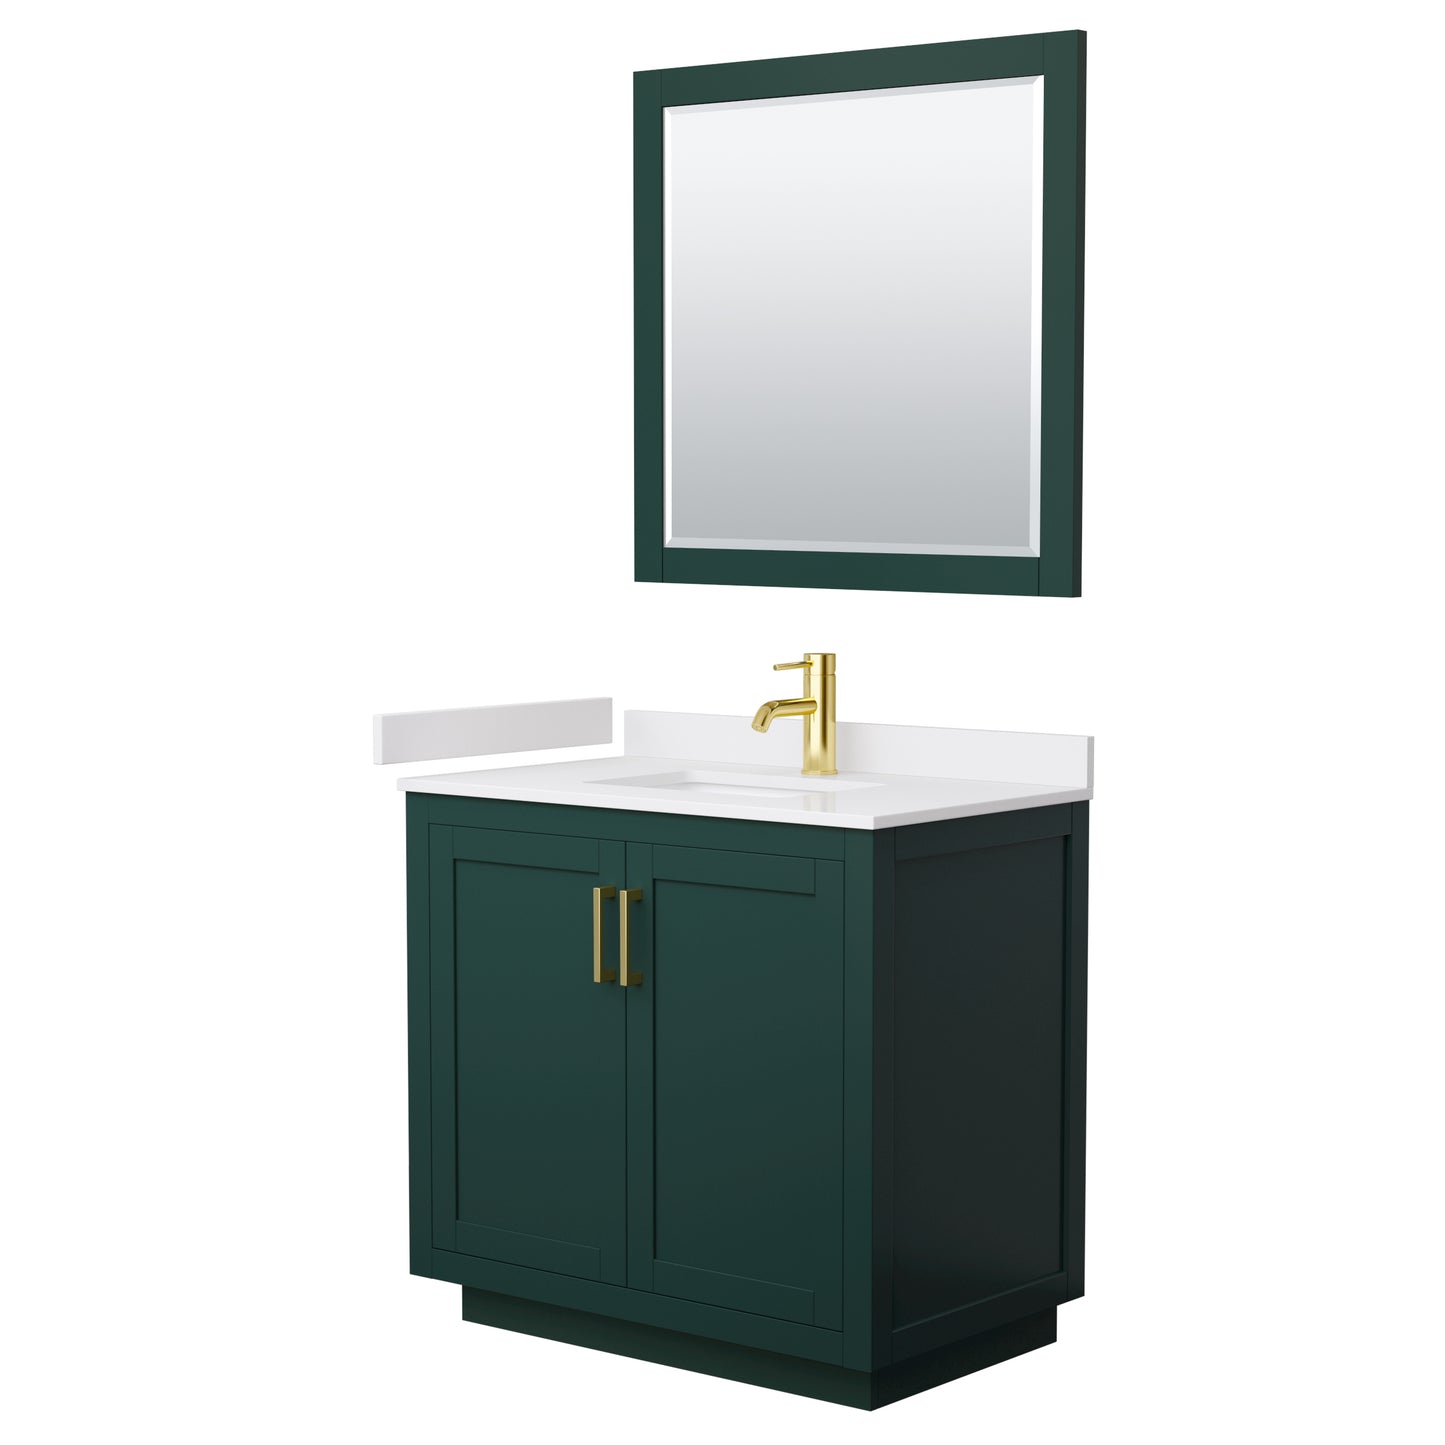 Wyndham Miranda 36 Inch Single Bathroom Vanity in Green with White Cultured Marble Countertop Undermount Square Sink and Trim - Luxe Bathroom Vanities